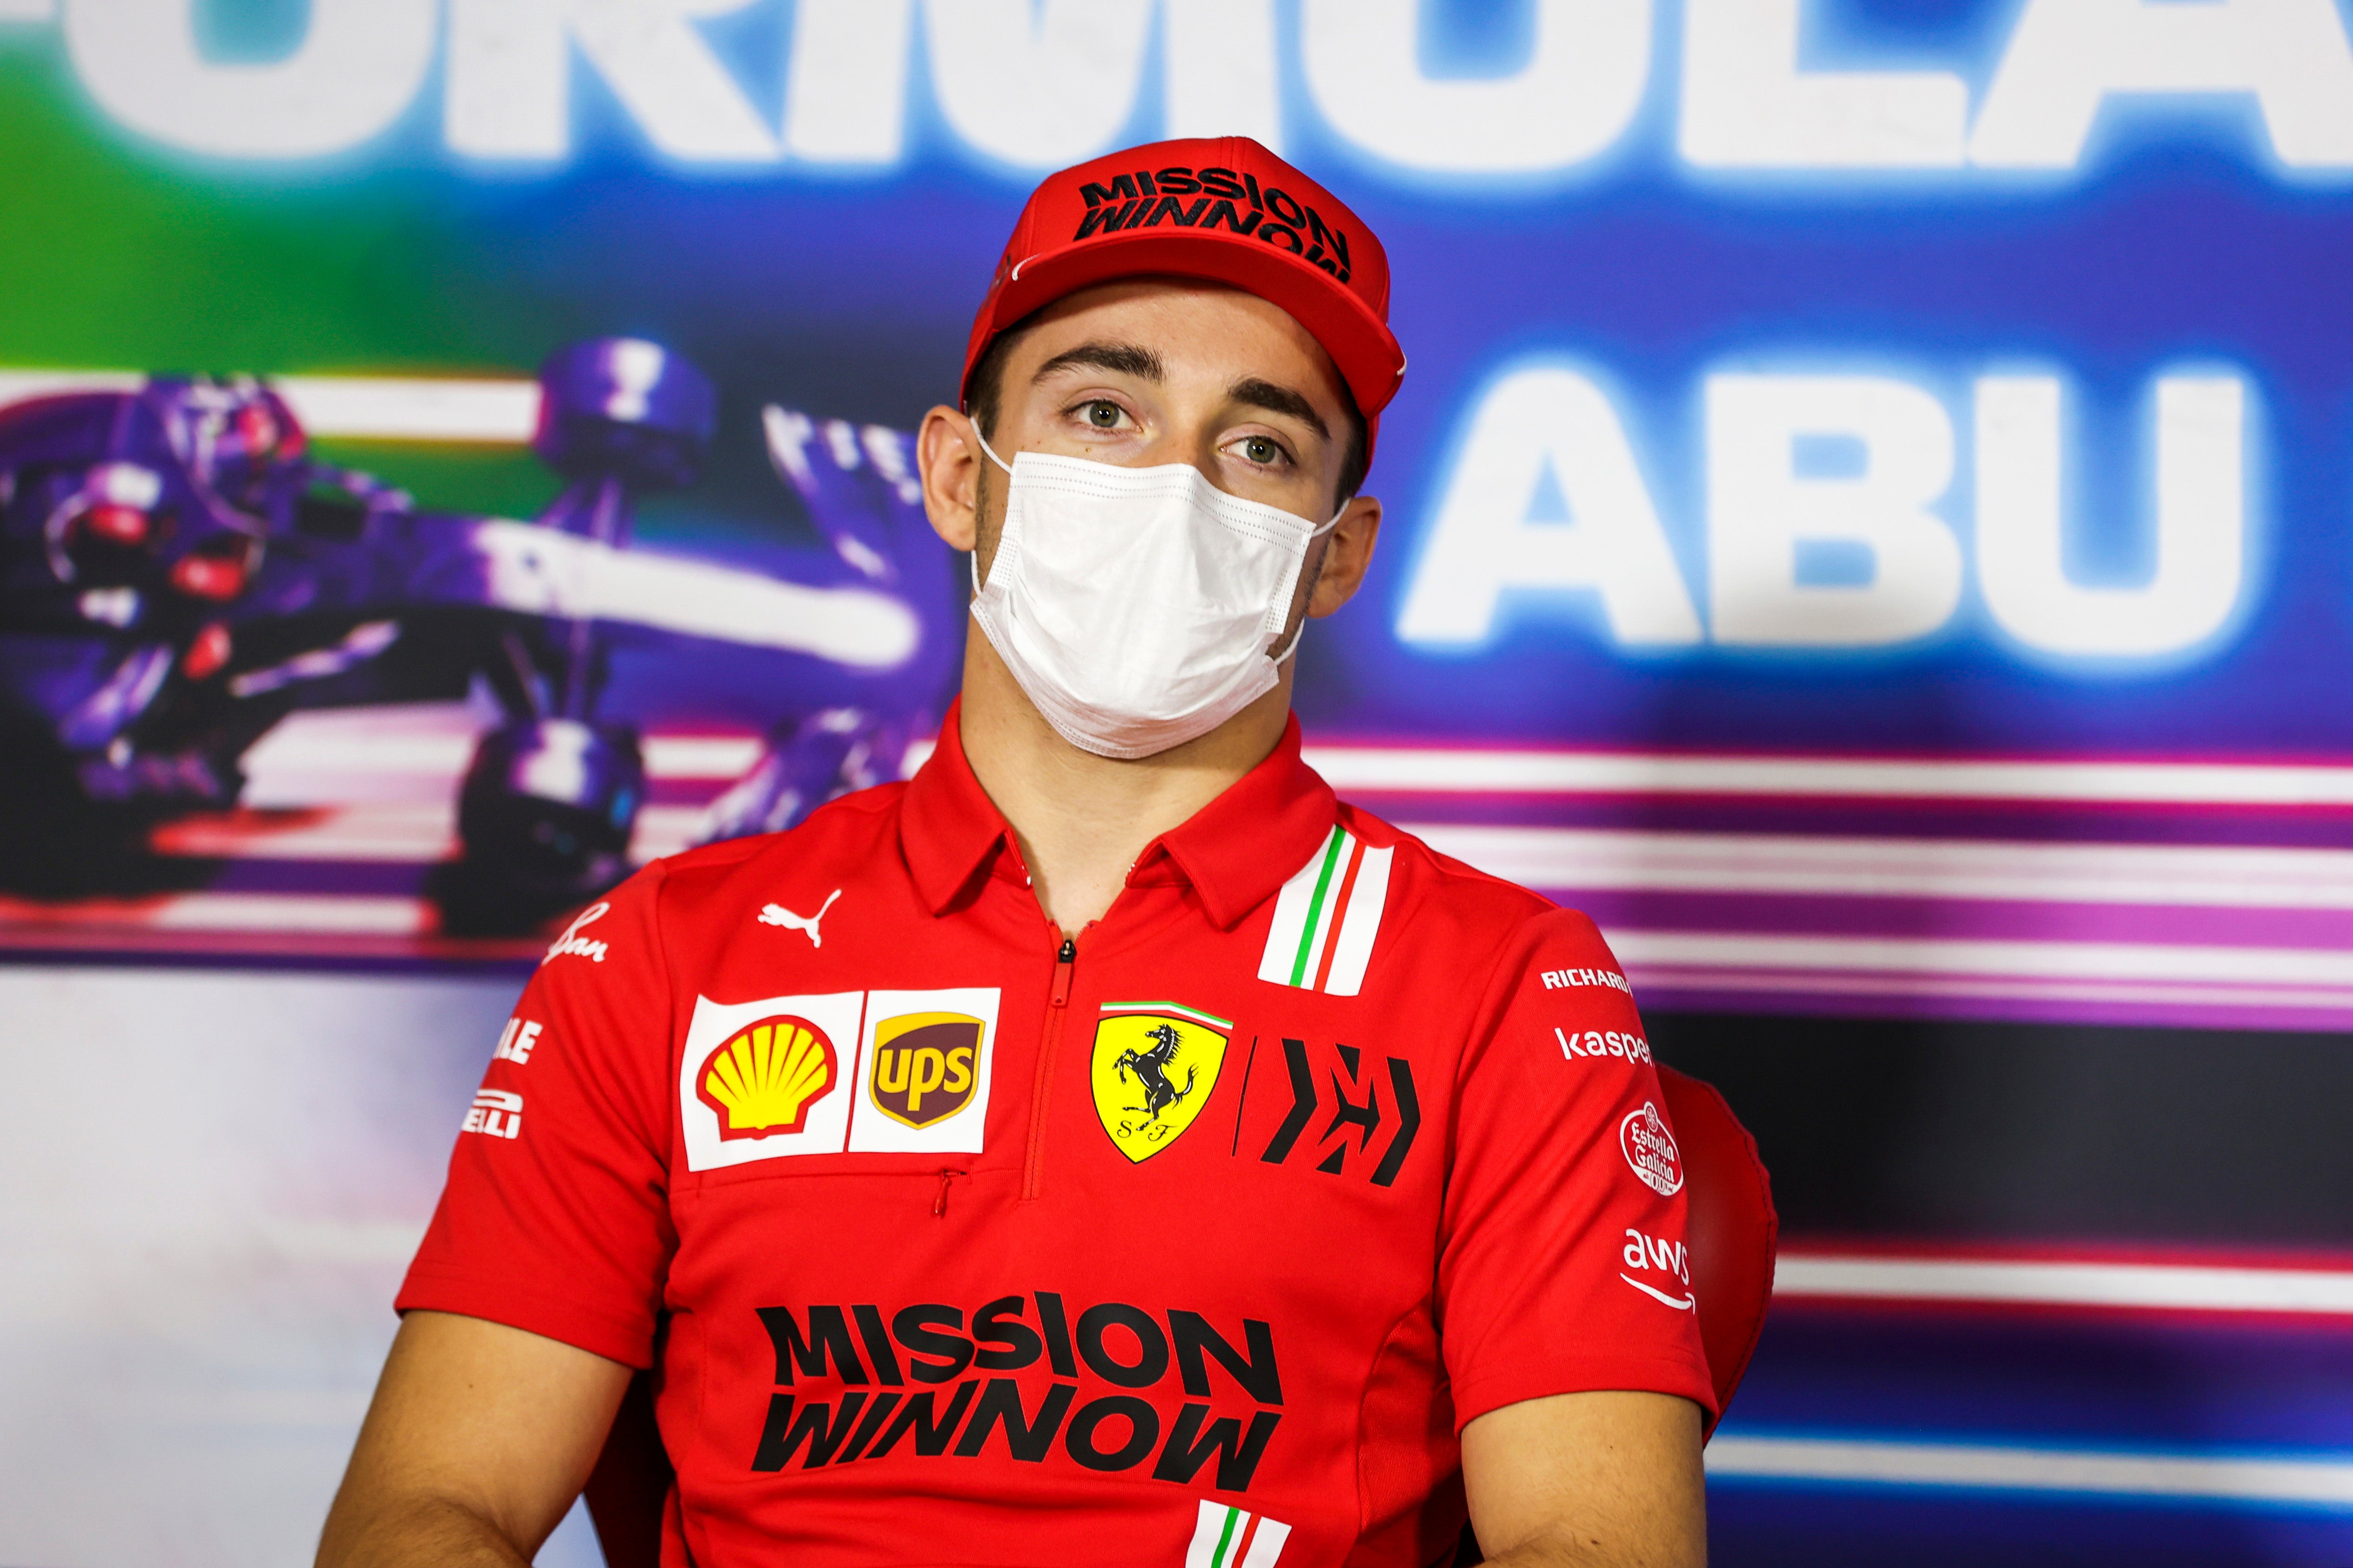 Leclerc was unlucky this season according to a Ferrari boss